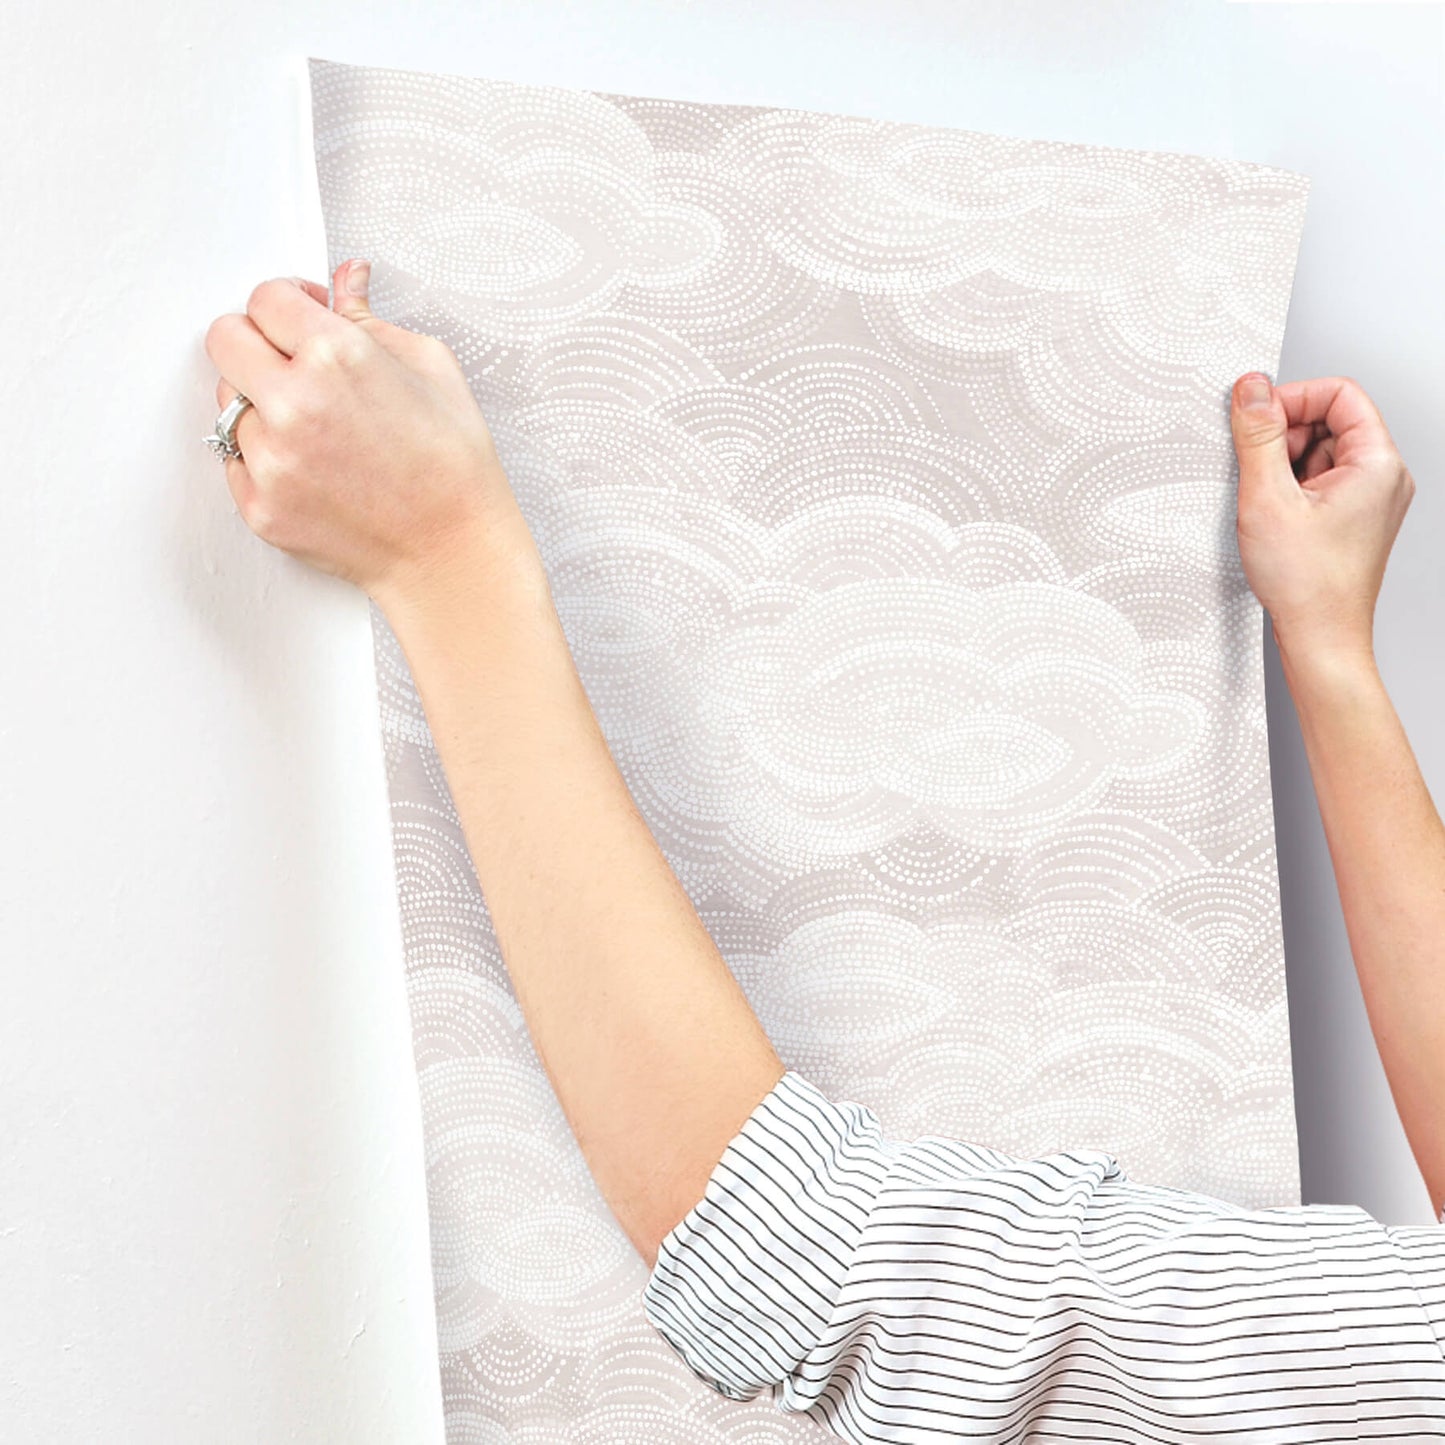 A-Street Prints Terrace Vision Wallpaper - Lavender